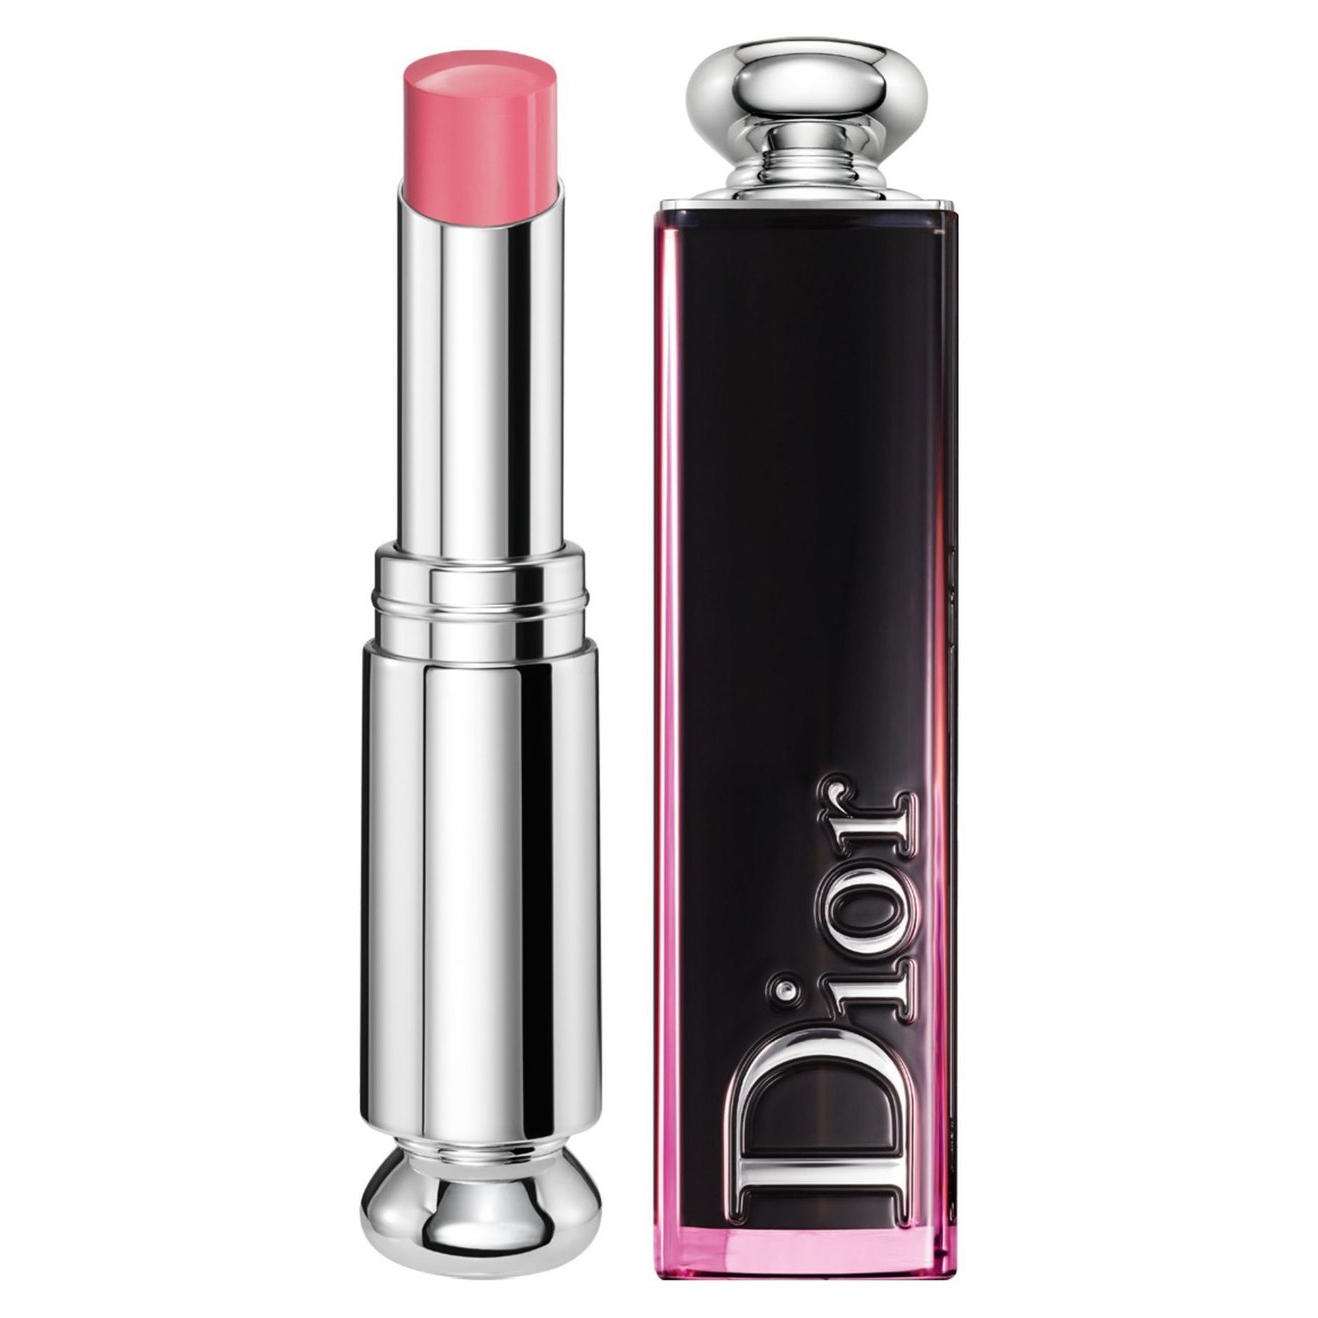 dior 550 lipstick